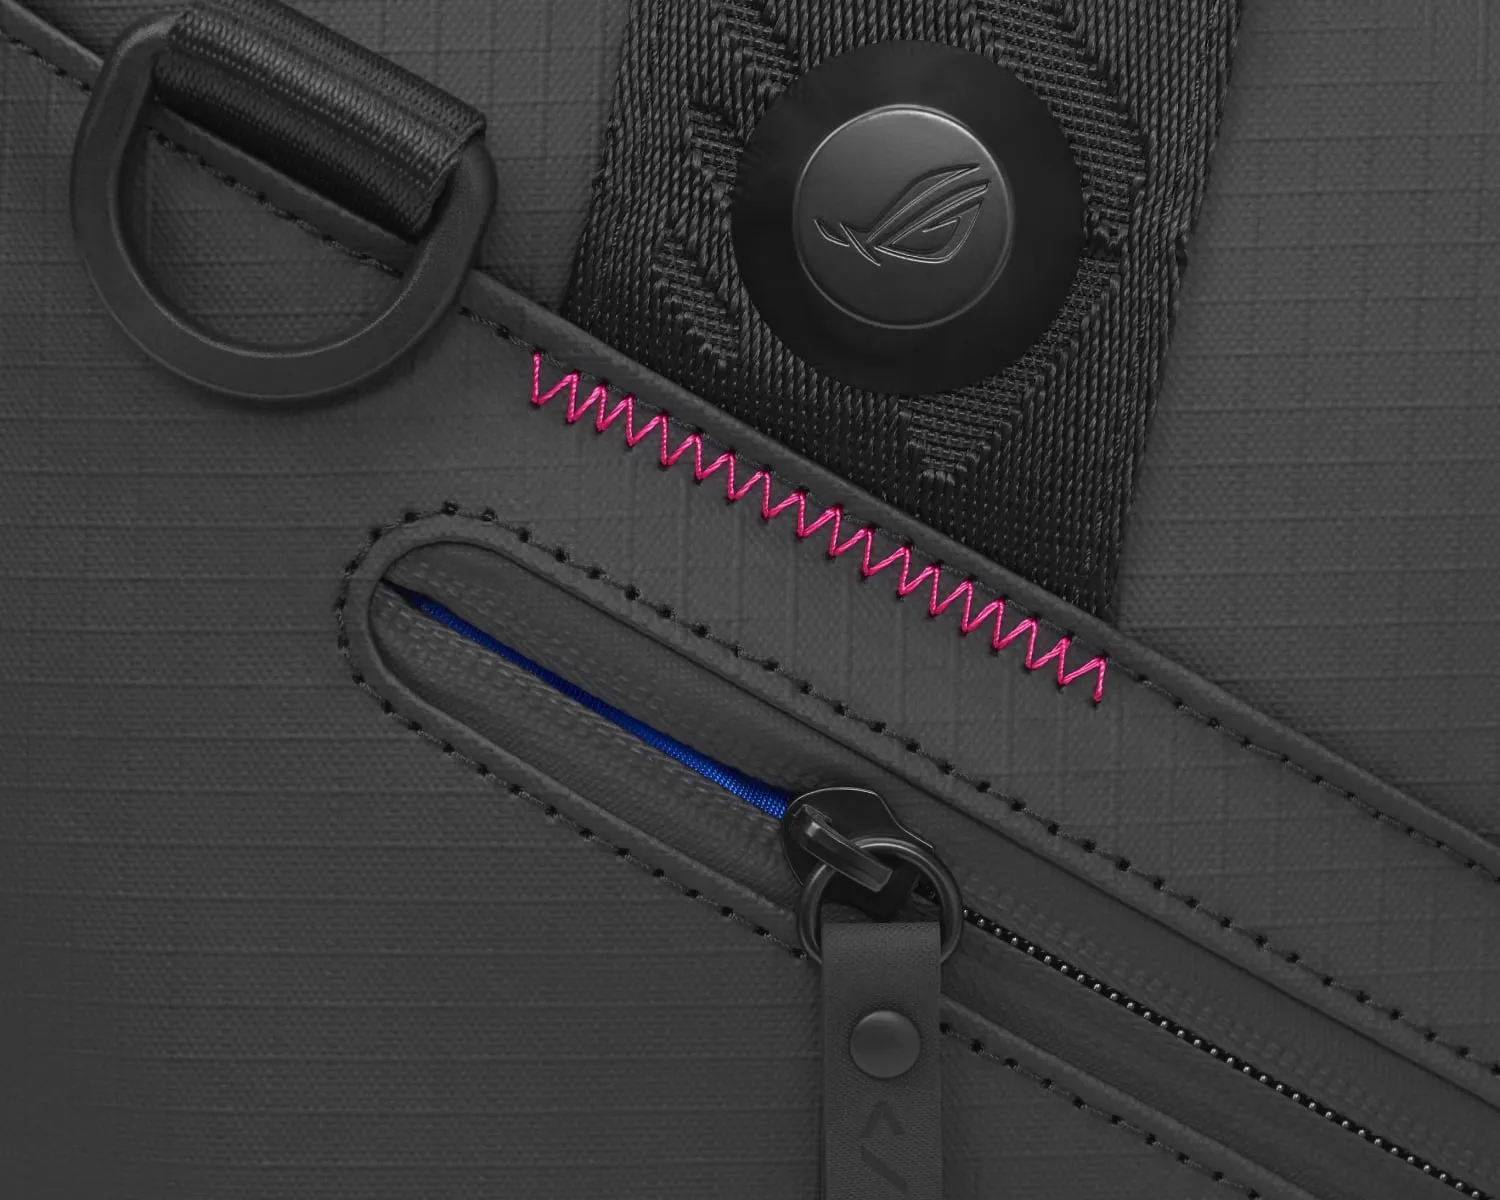 Extreme close-up of the ROG SLASH Duffle Bag's exterior zipper